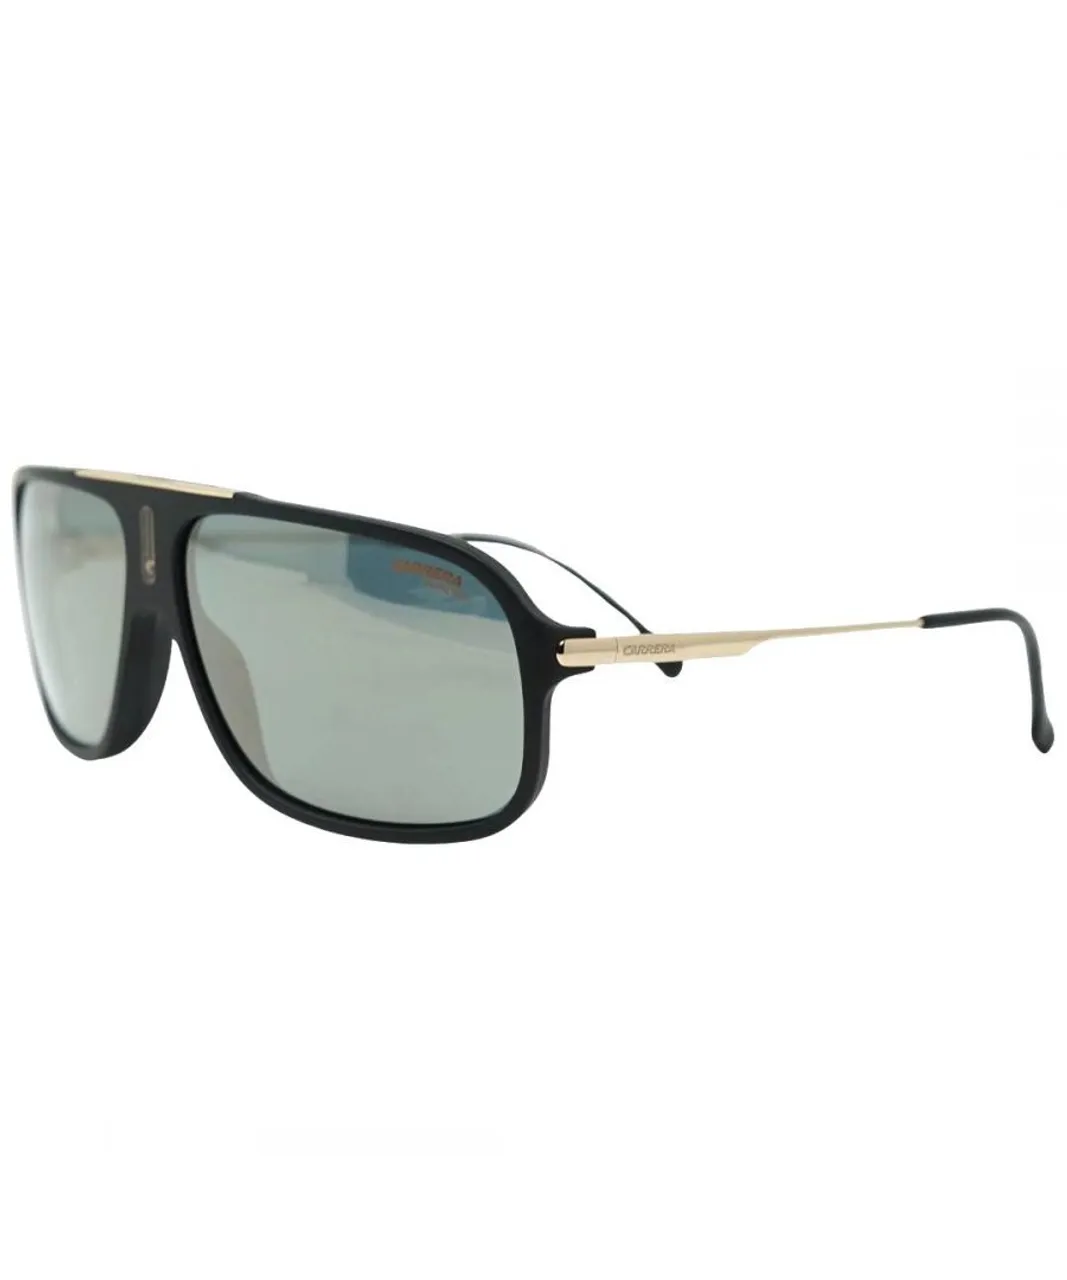 Carrera Mens 8014 0R80 Black Sunglasses - One